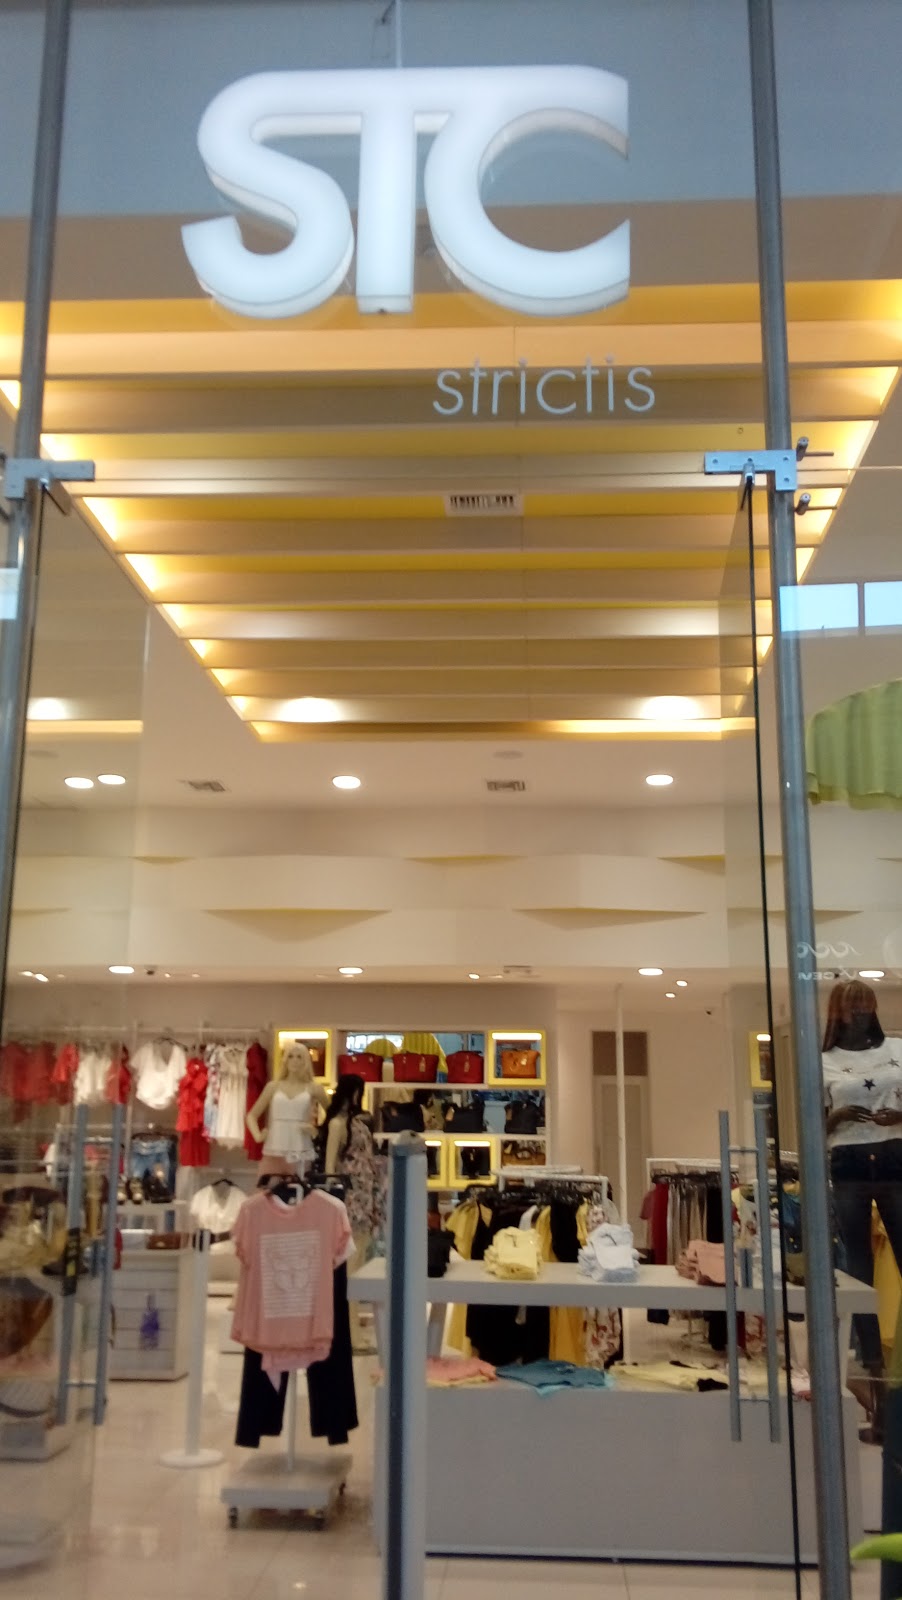 STC Strictis